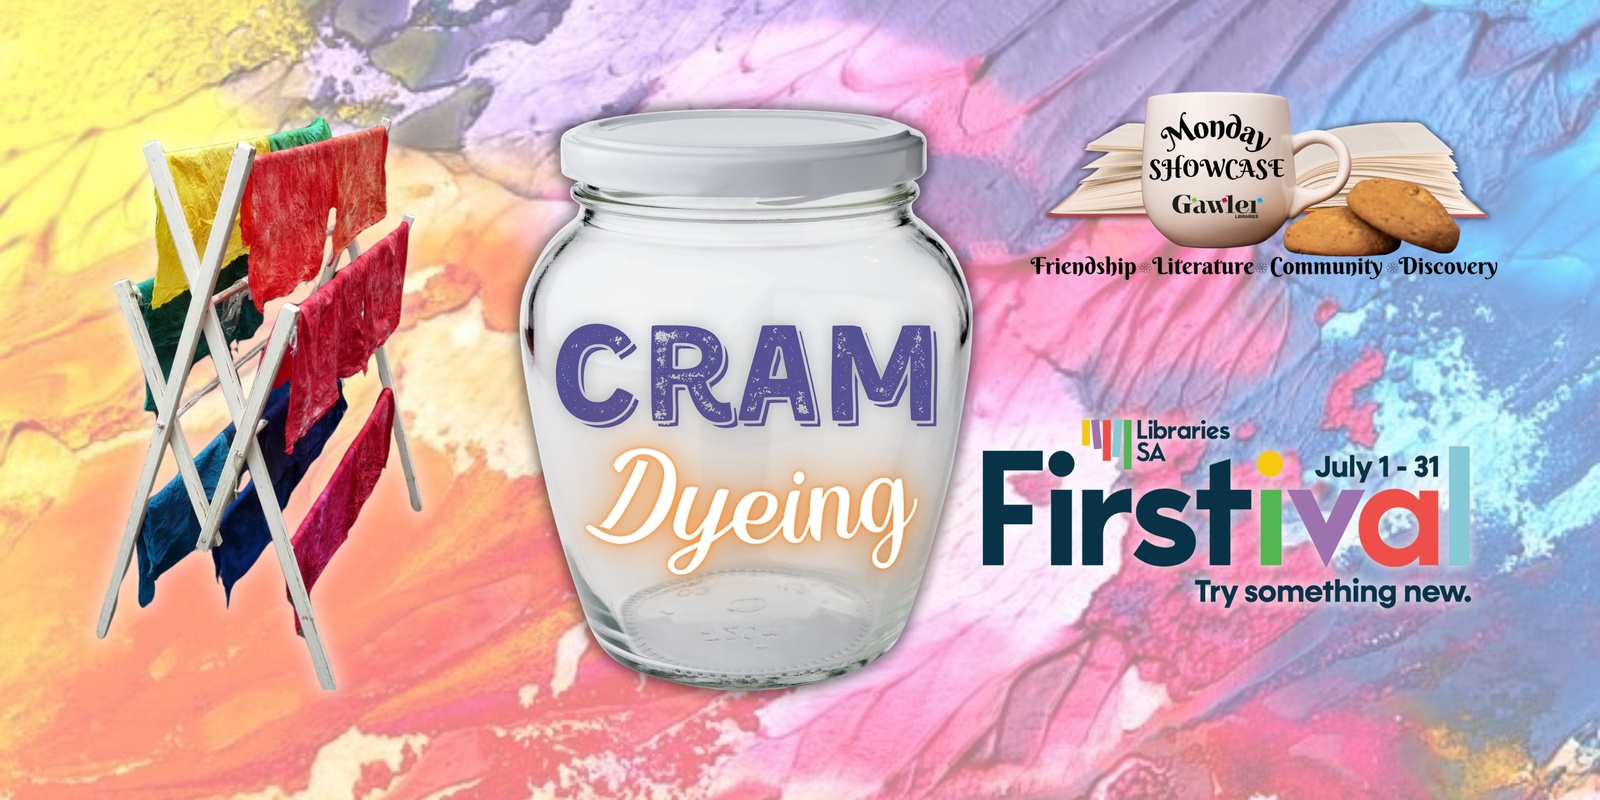 Banner image for Cram dyeing - Monday Showcase - 11am